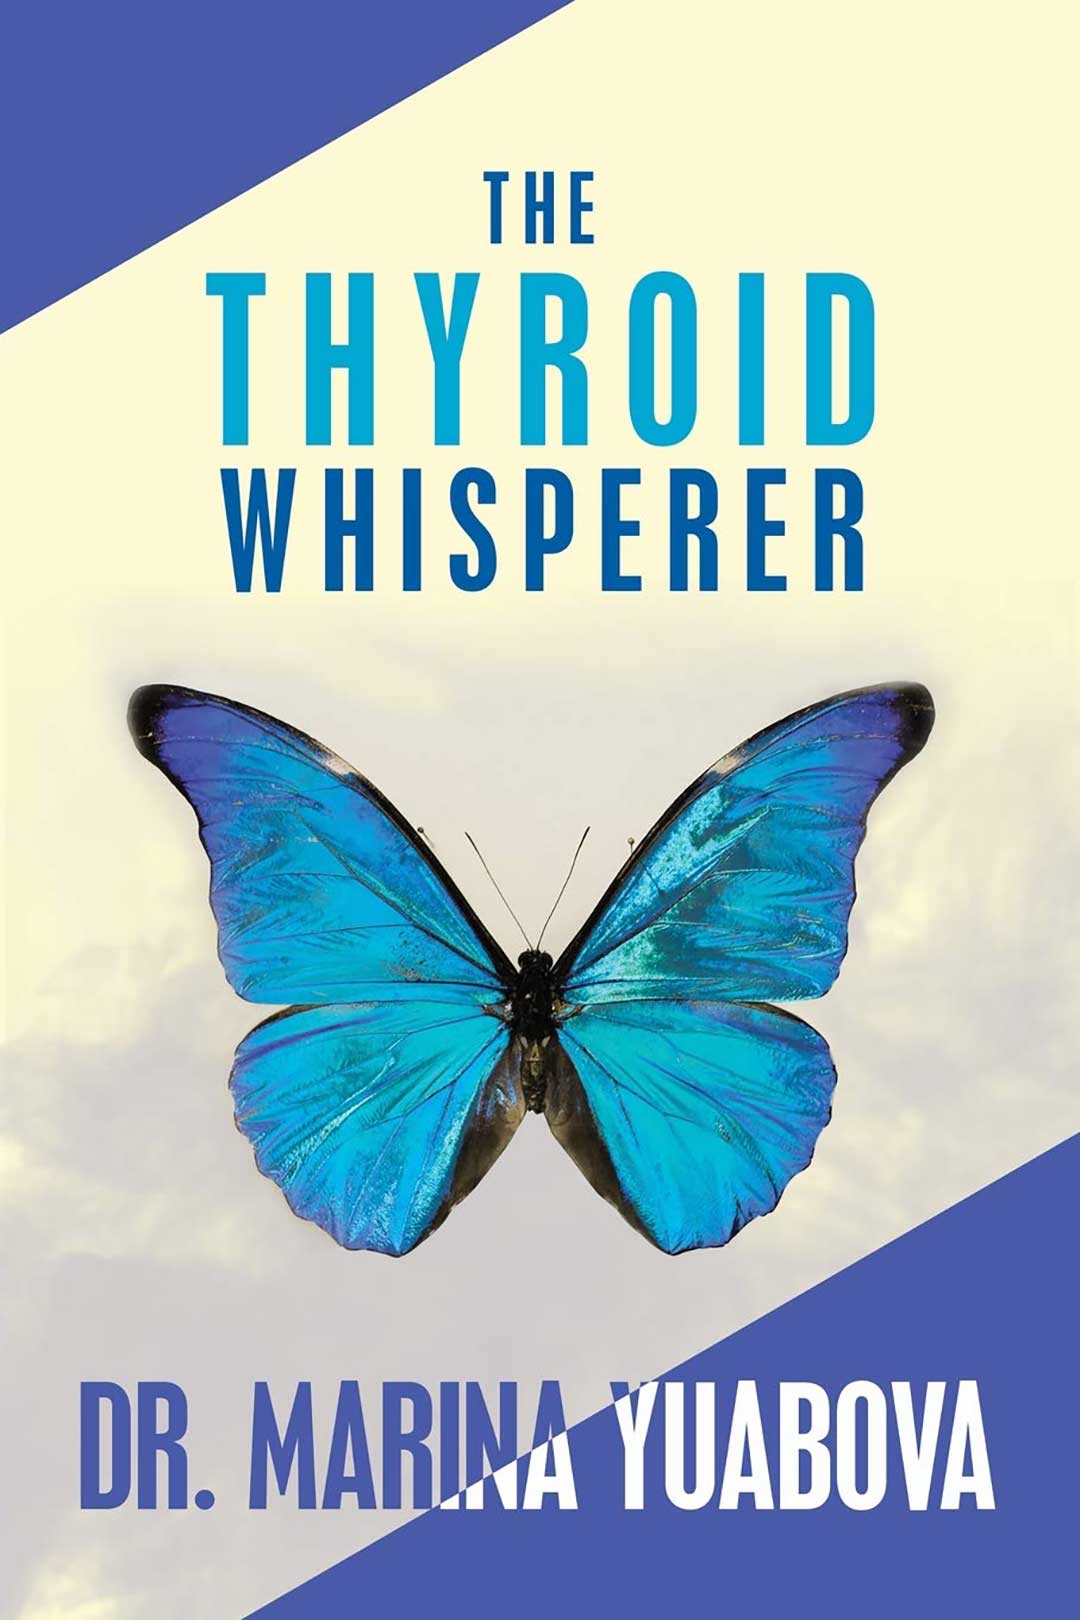 The Thyroid Whisperer, by Marina Yuabova, DNP, FNP